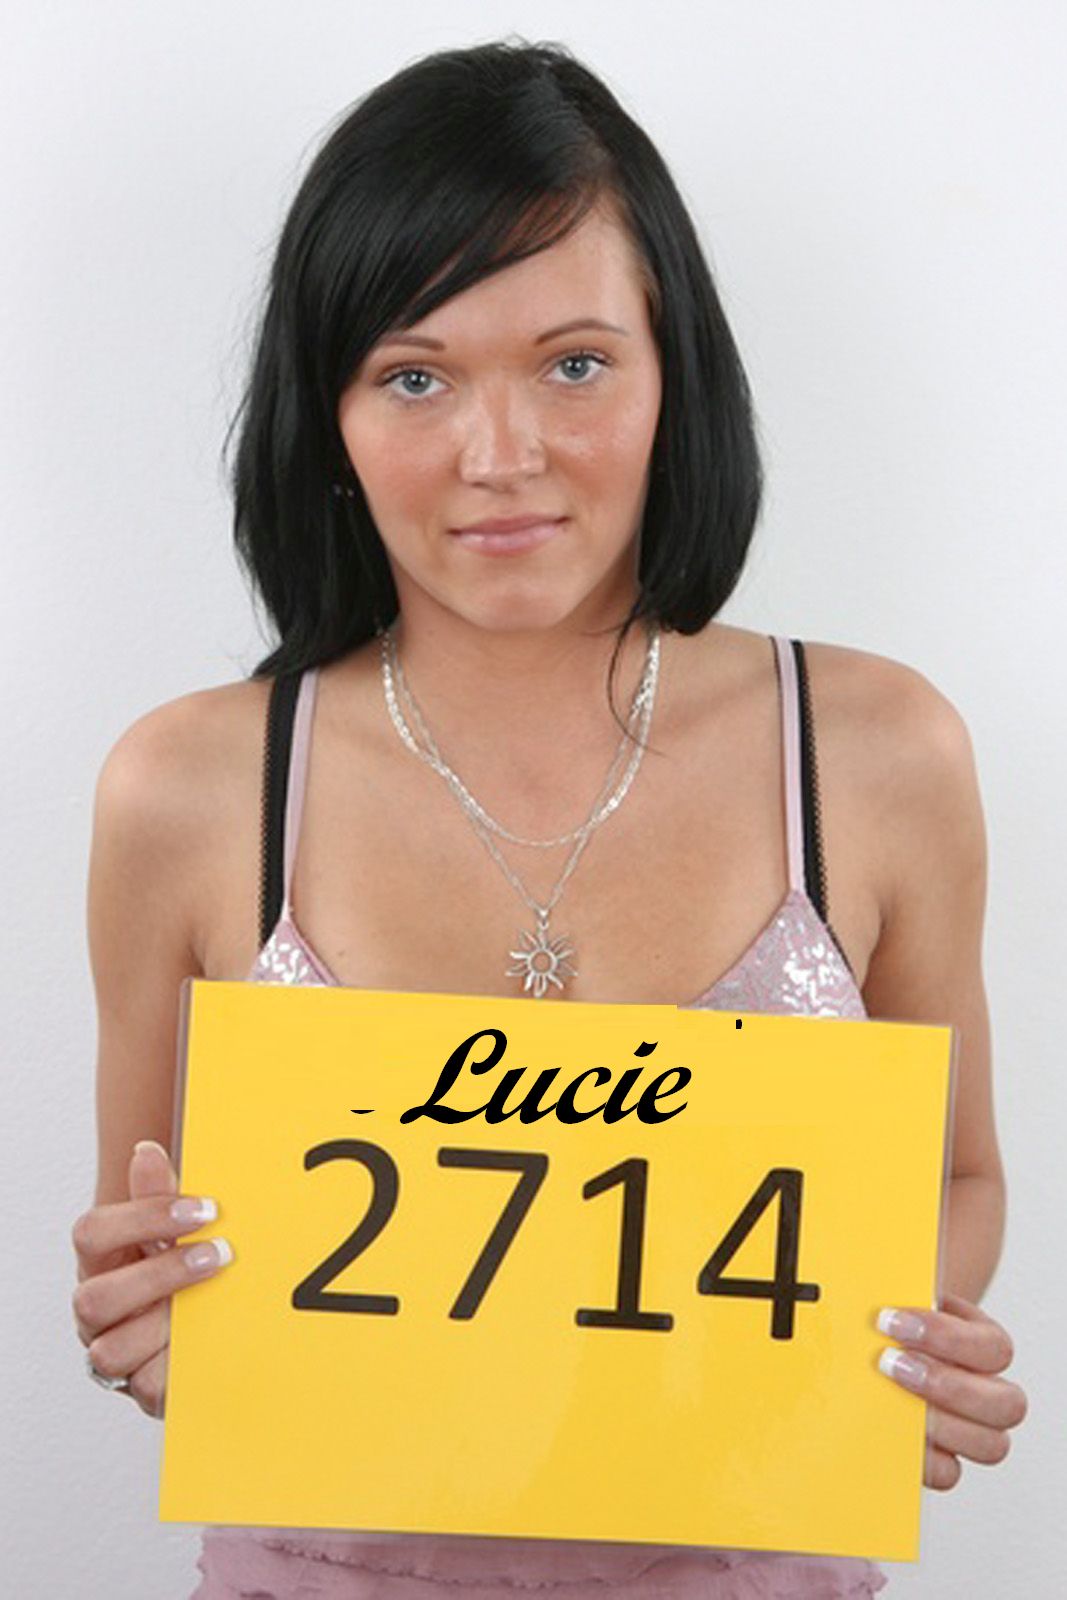 Czech Casting 03 2714 Lucie 1 Porn Pic Eporner 